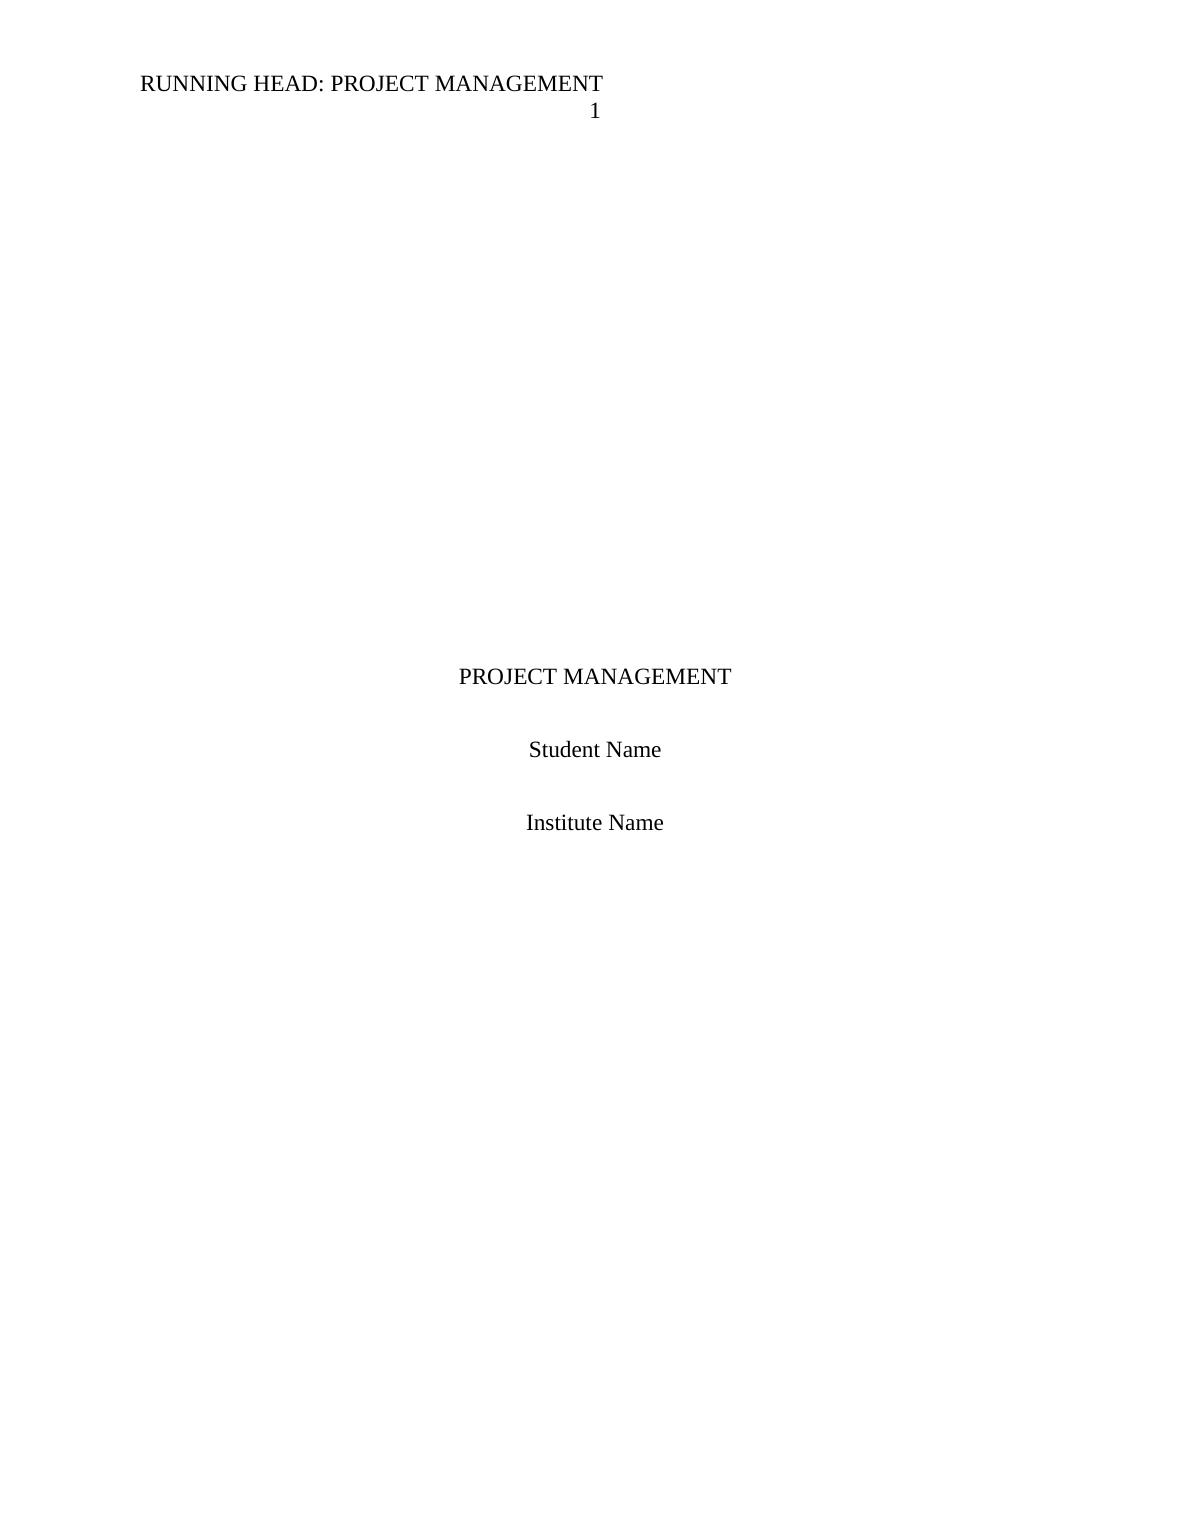 INFT3100 - Project Management - Assignment_1